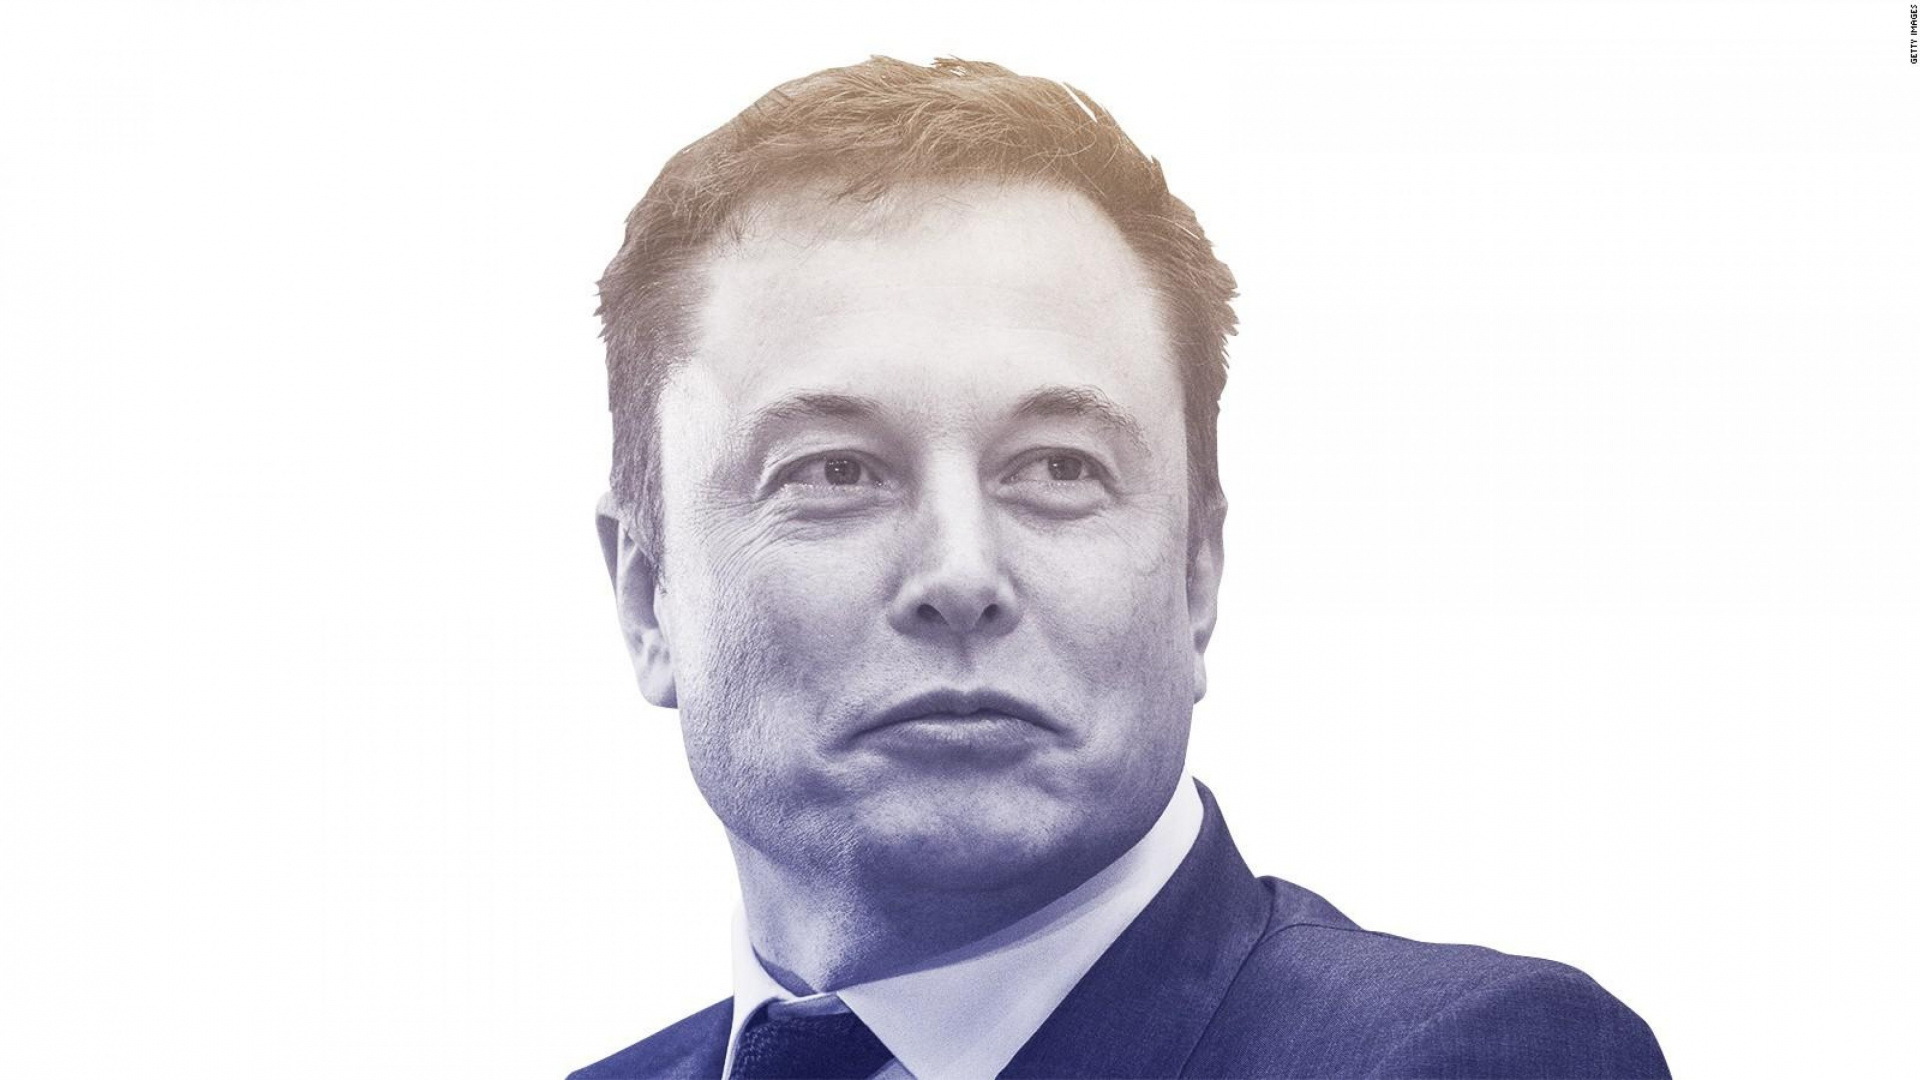 Elon Musk, Face, Head, Chin, Forehead. Wallpaper in 1920x1080 Resolution